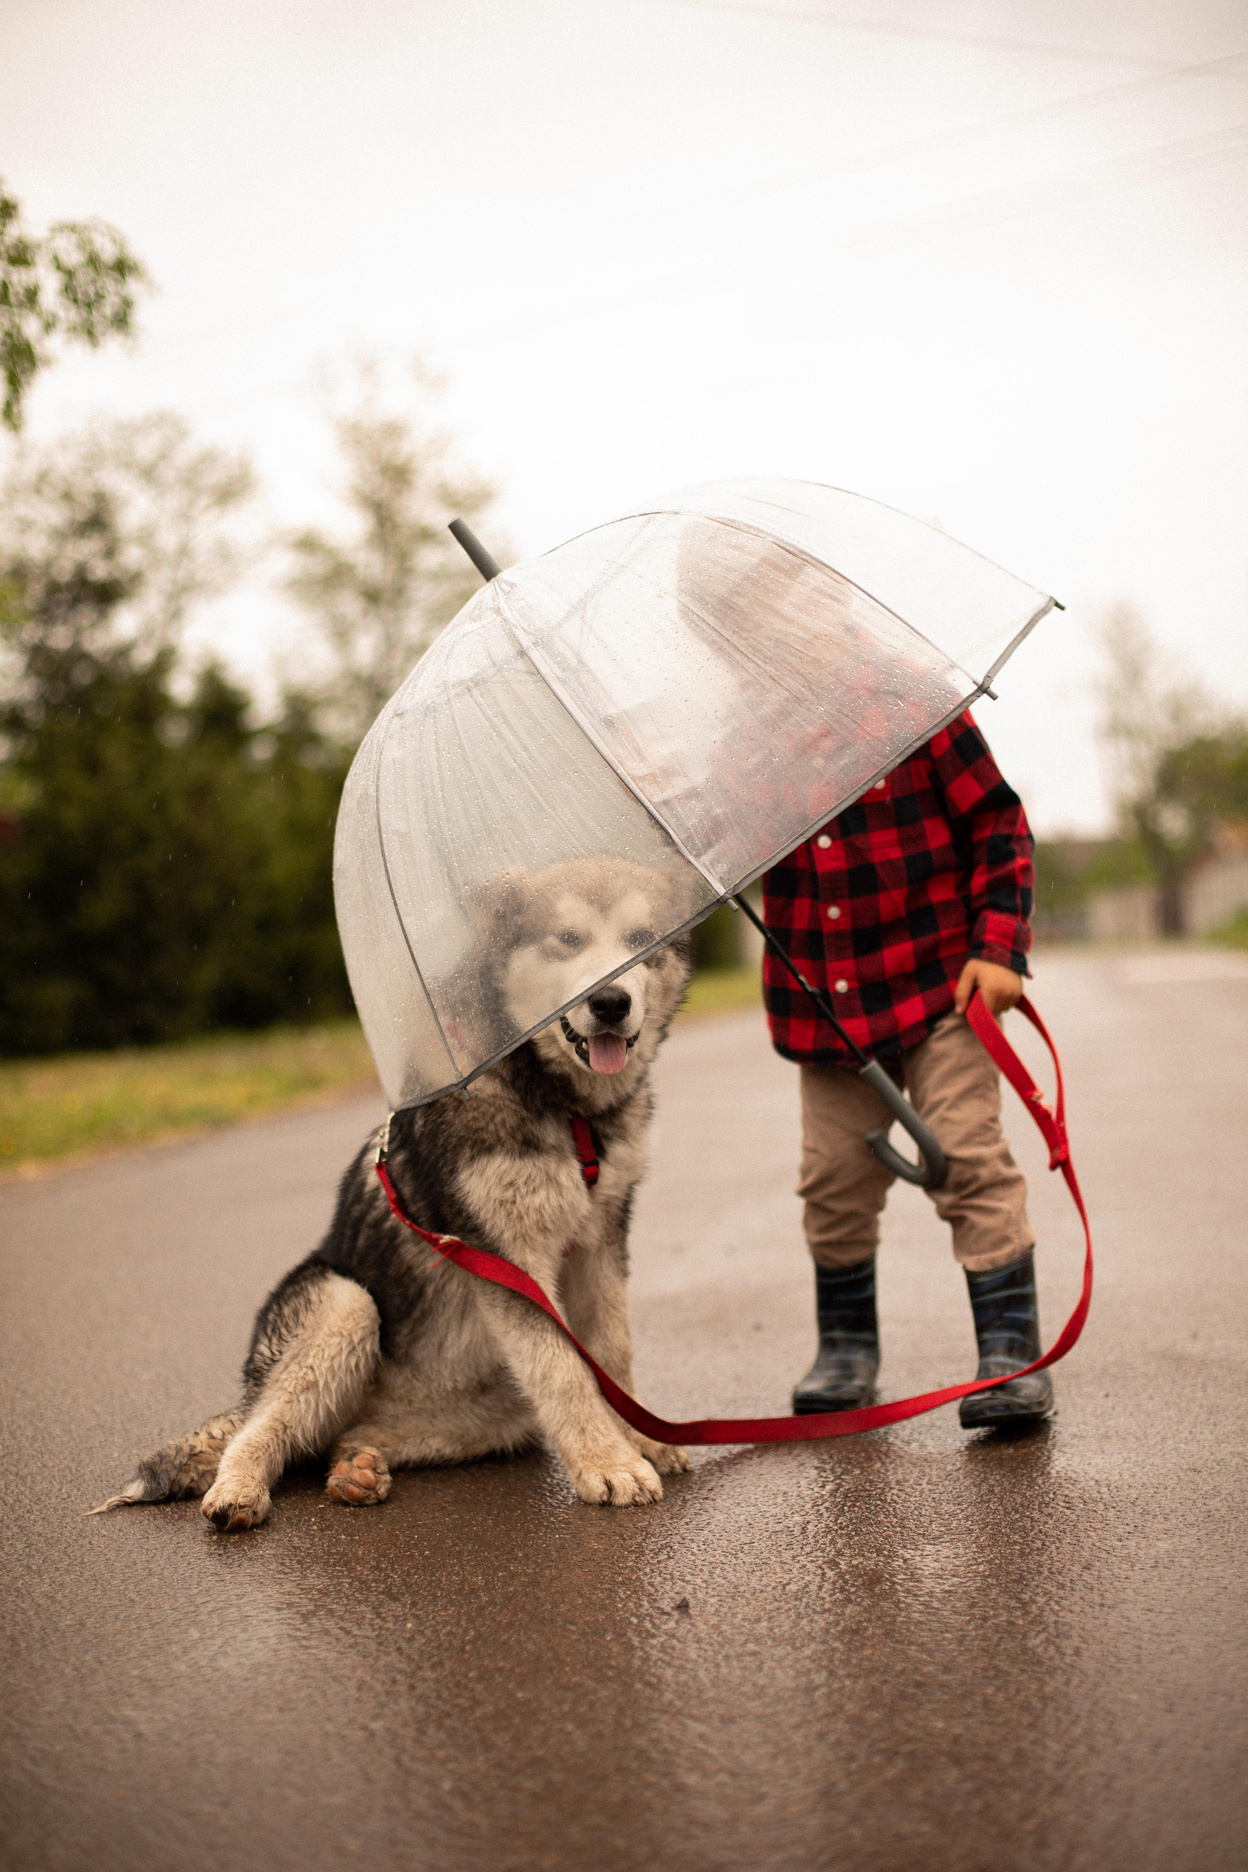 Child and Dog Under an Umbrella